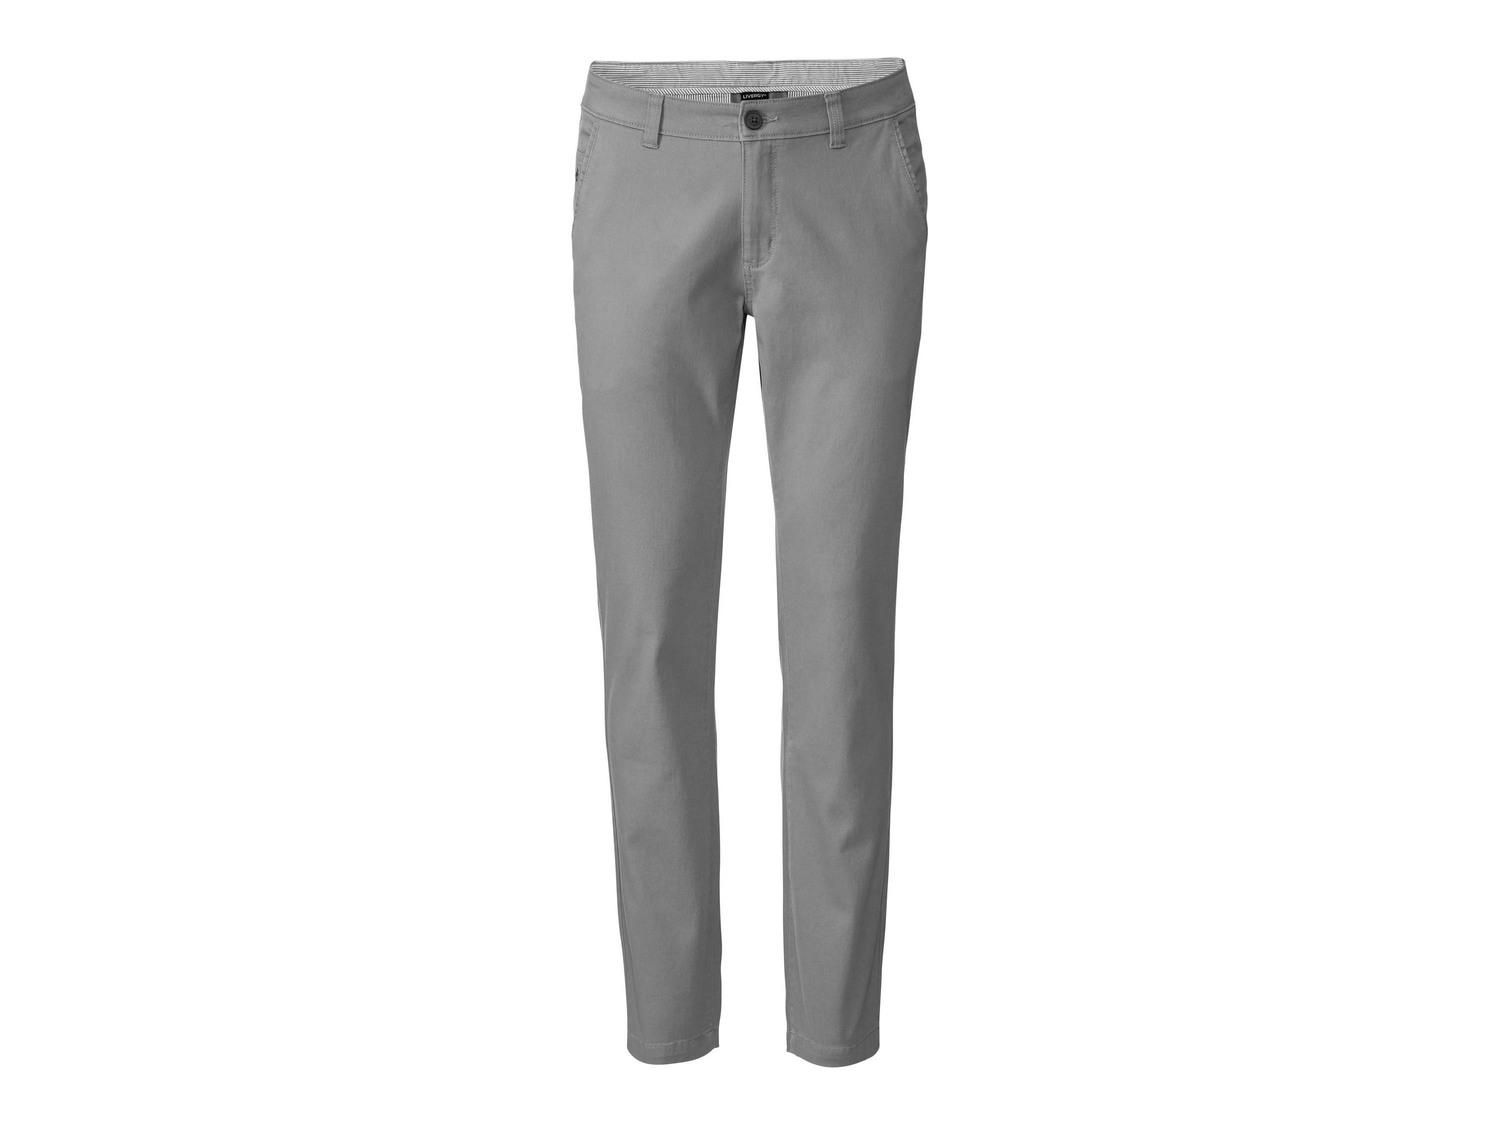 Pantaloni Slim Fit da uomo Livergy, prezzo 9.99 &#8364; 
Misure: 46-54
- Oeko ...